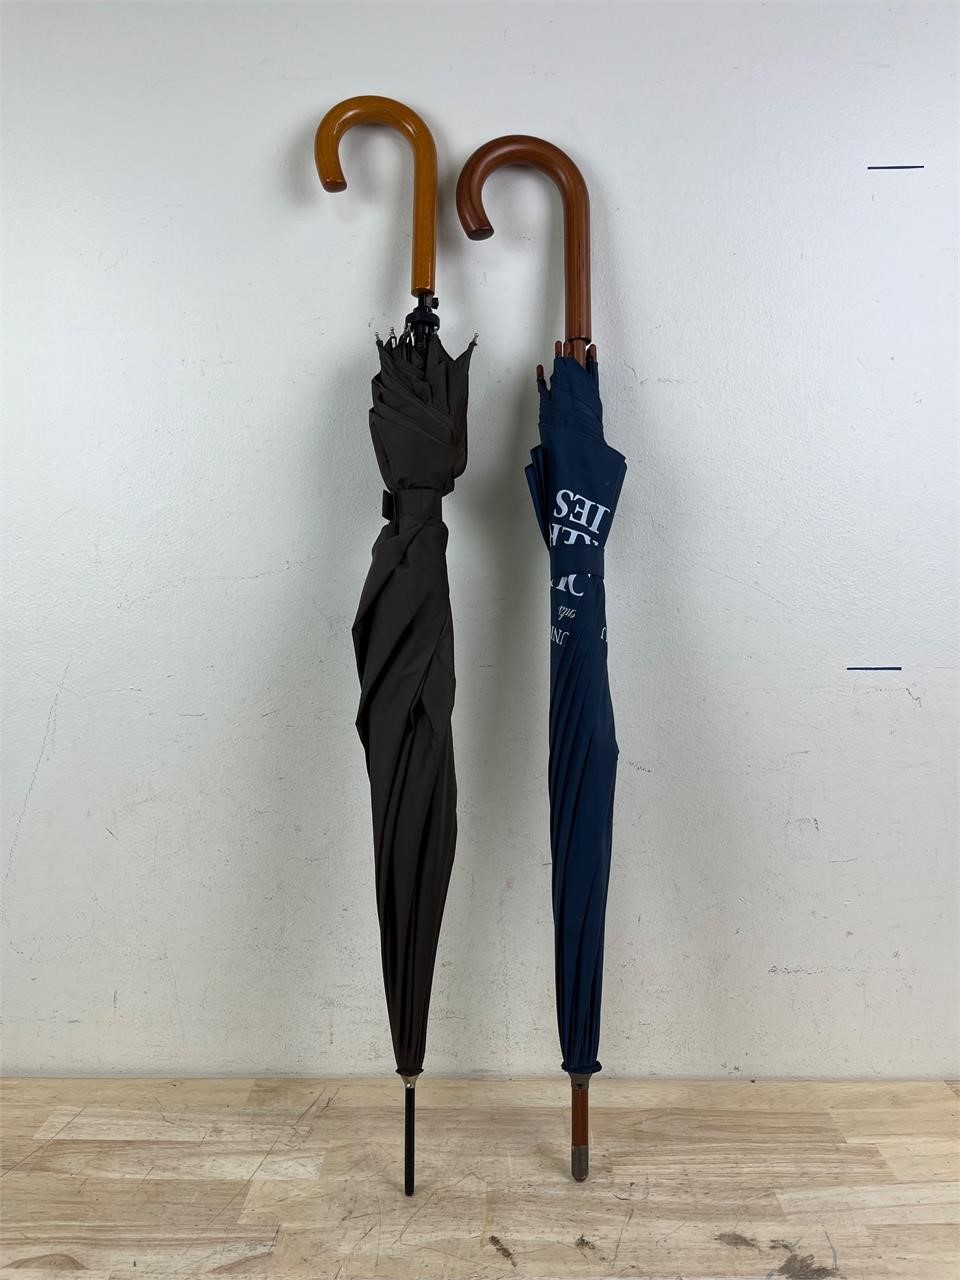 Two umbrellas